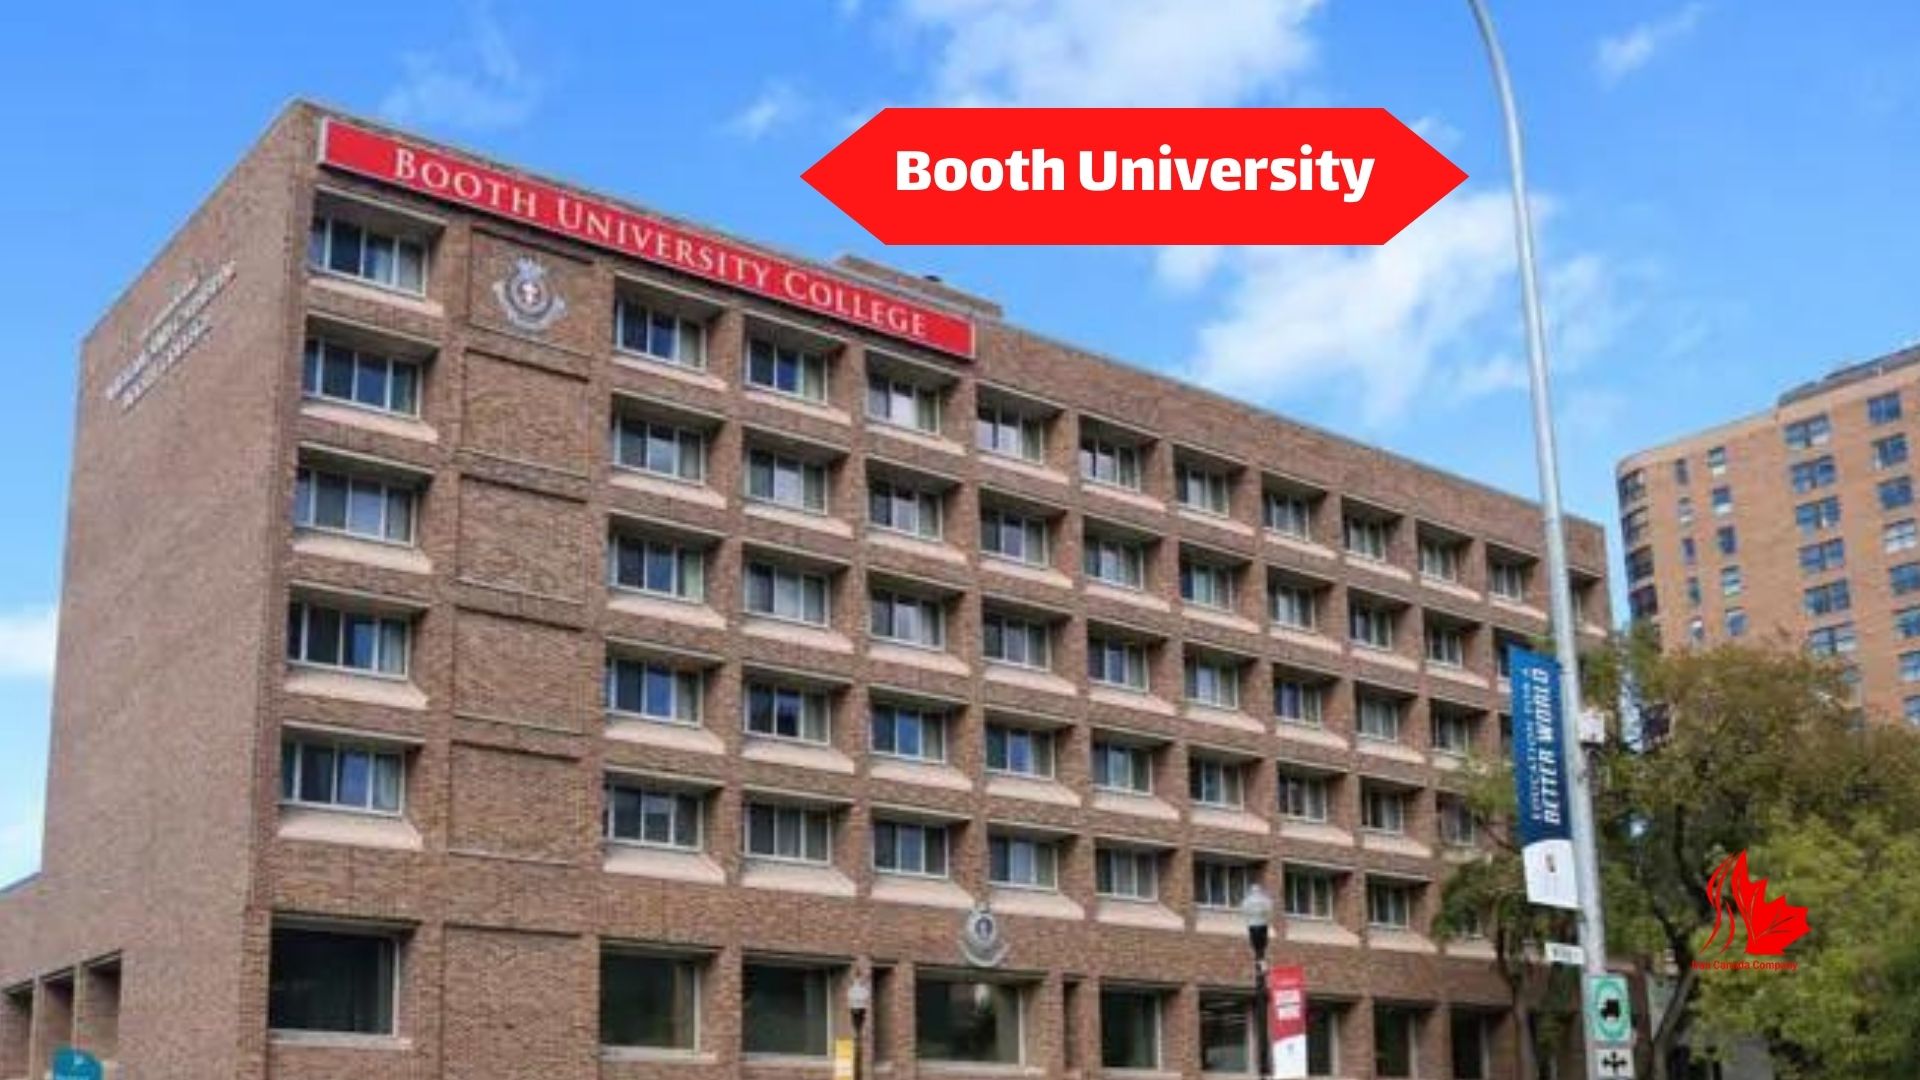 Booth University